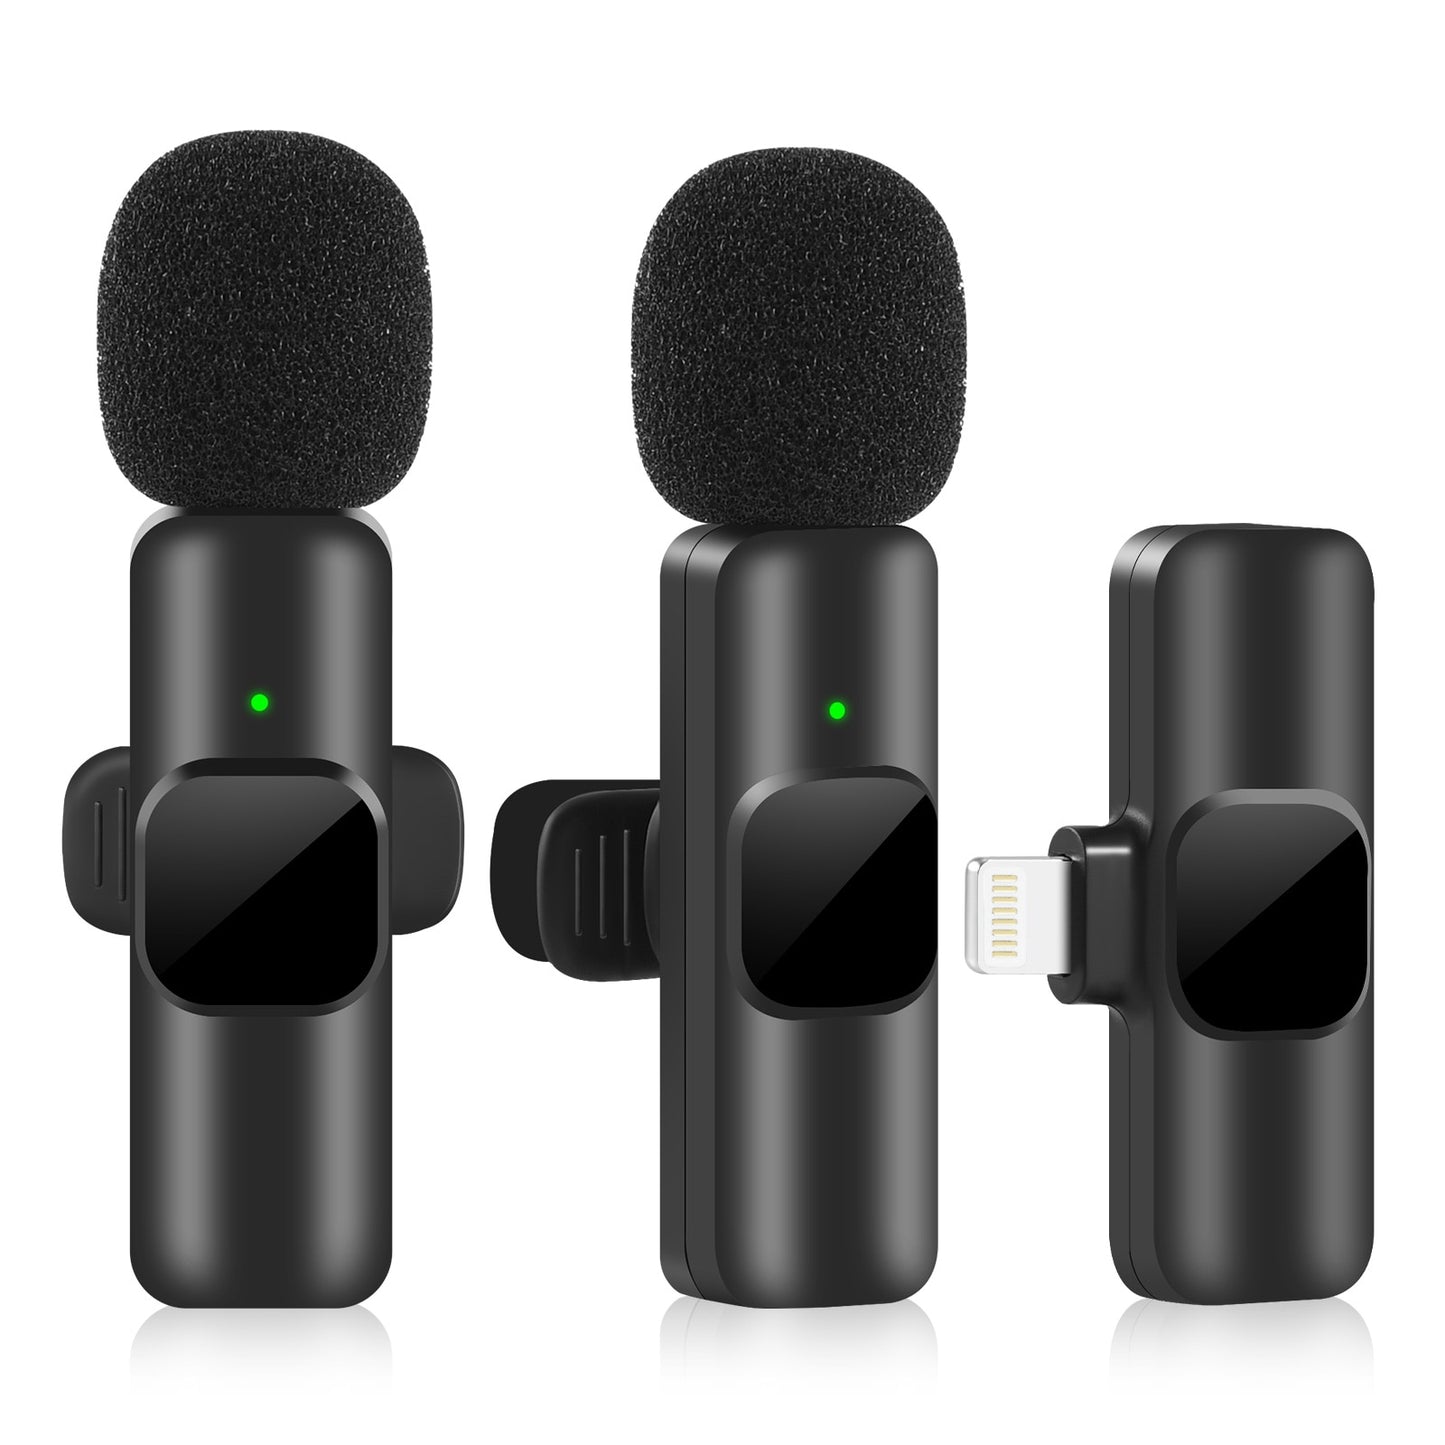 Wireless Lavalier Microphone - Hv's choice